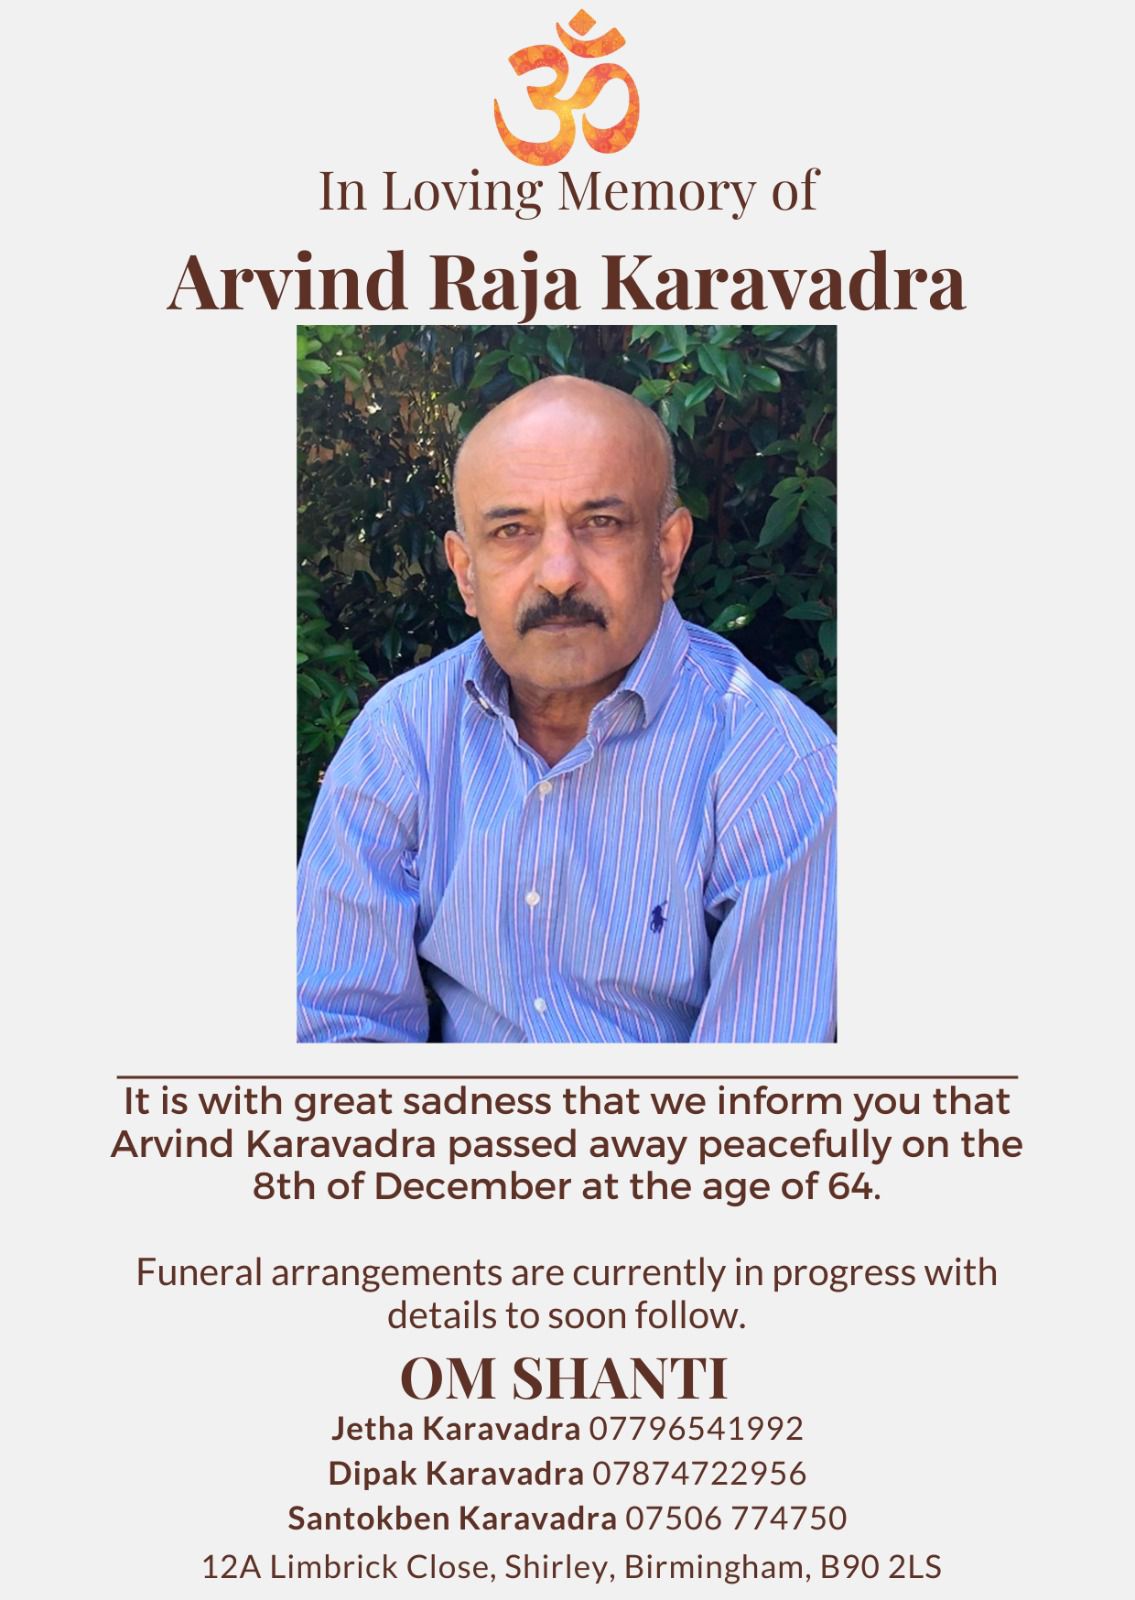 Arvind Raja Karavadra